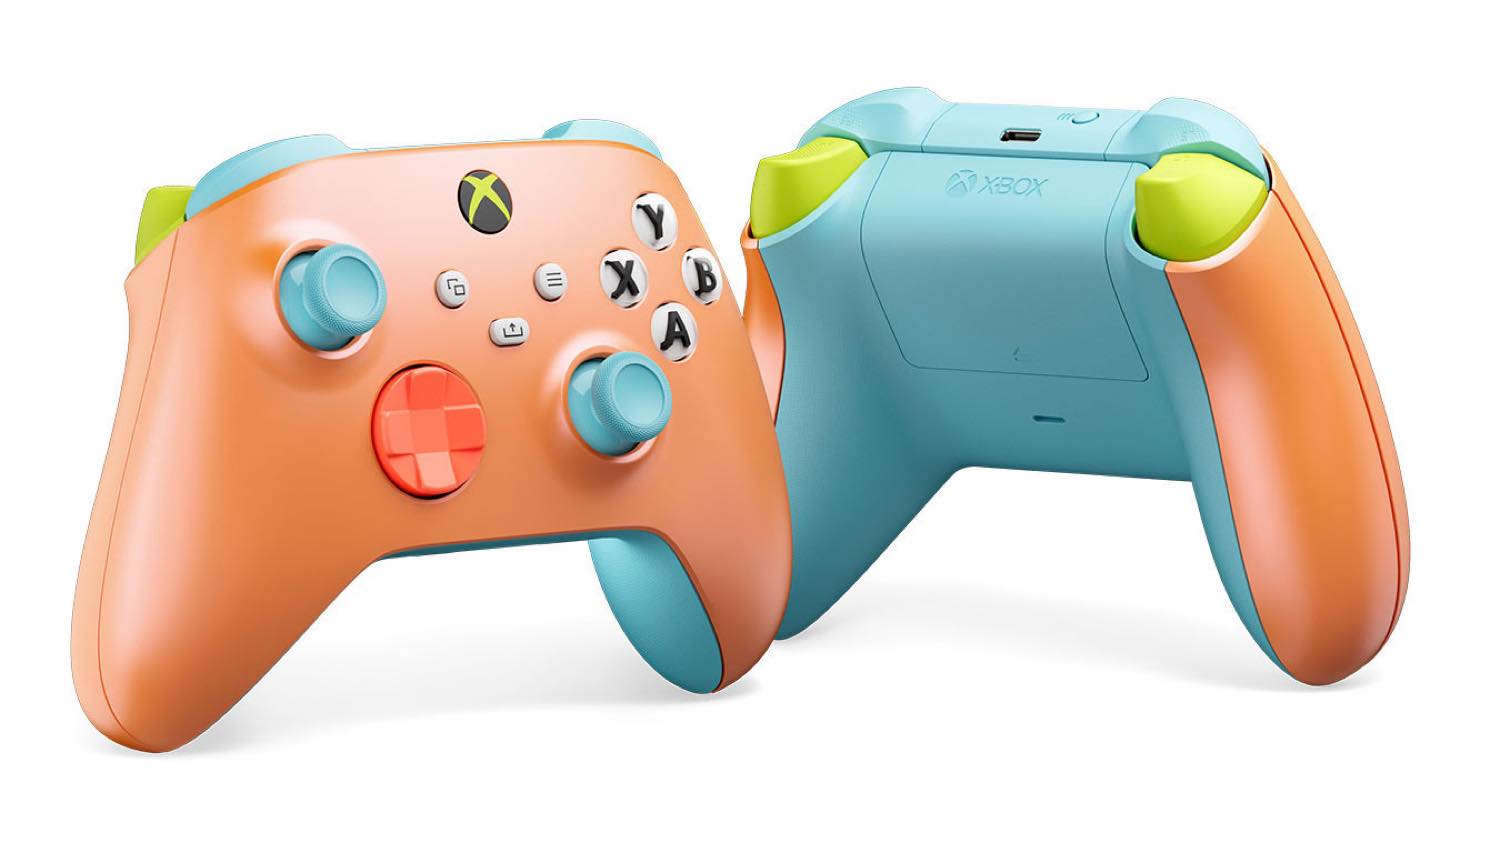 Microsoft、｢Xbox ワイヤレス コントローラー｣のネイルブランド｢OPI｣とのコラボモデル｢サンキスド バイブス オーピーアイ｣を発表